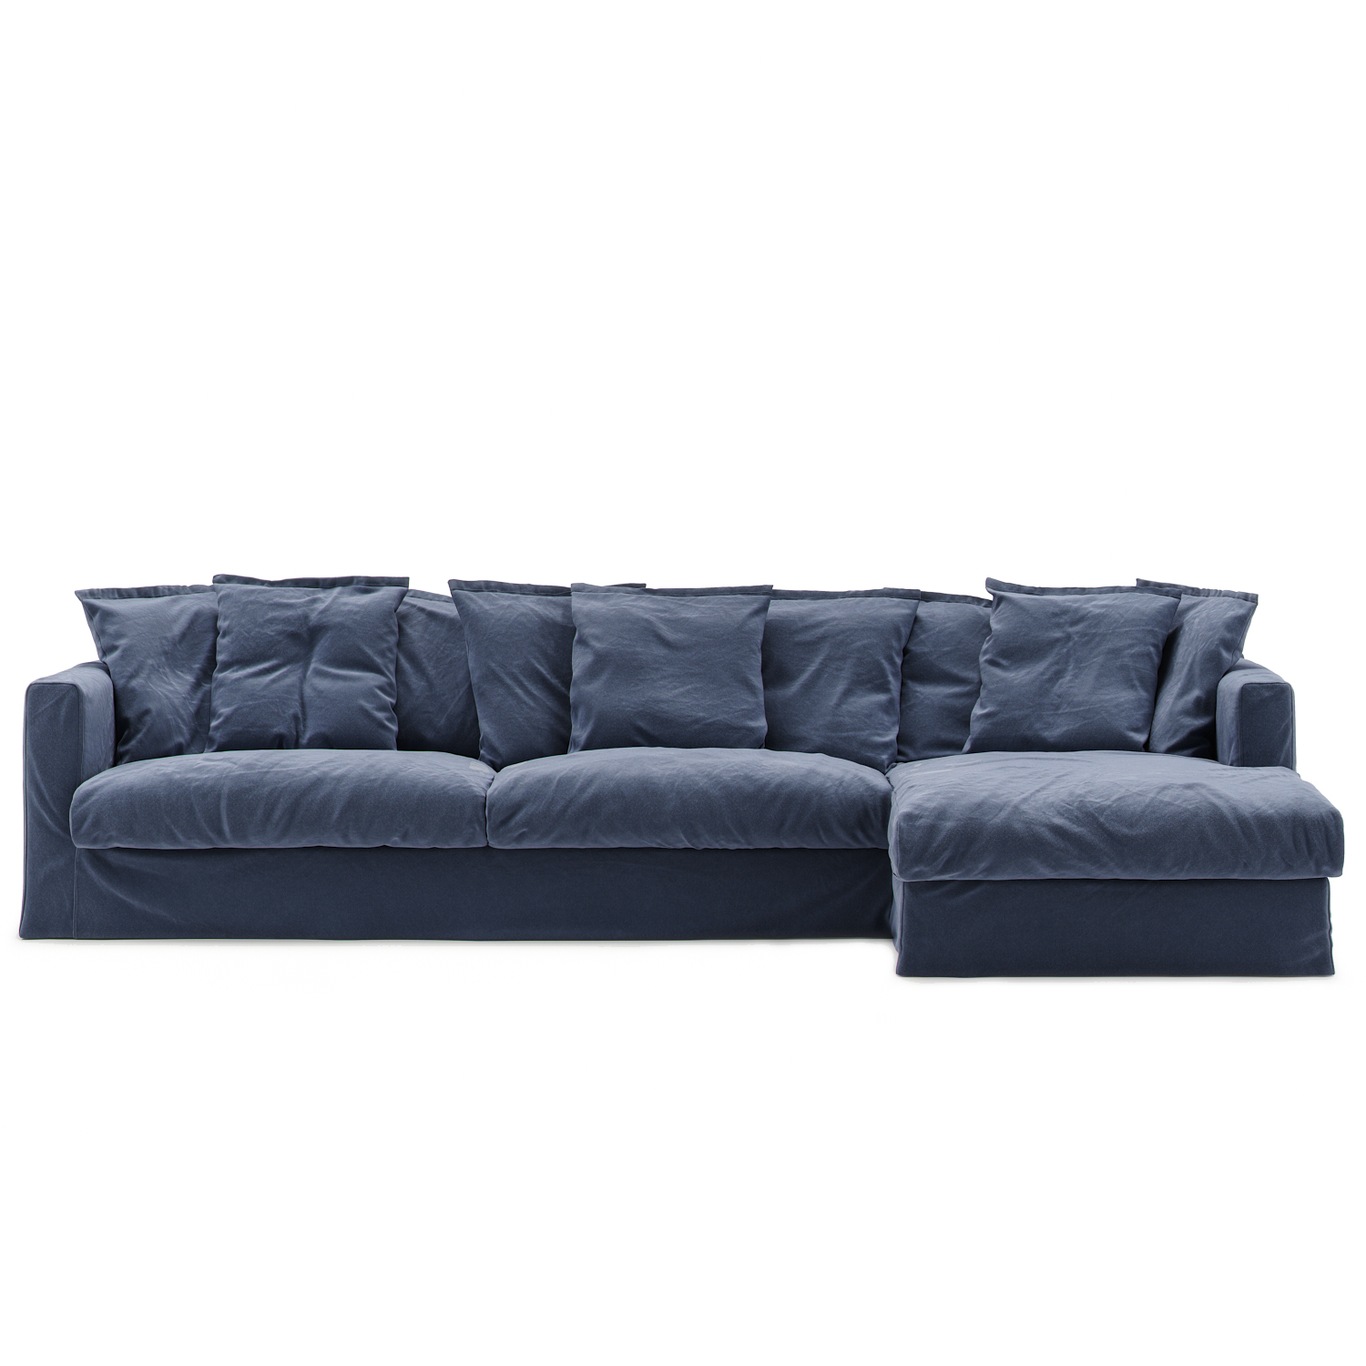 Le Grand Air Sofa 3-Sitzer Baumwolle Liege Rechts, Dunkelblau